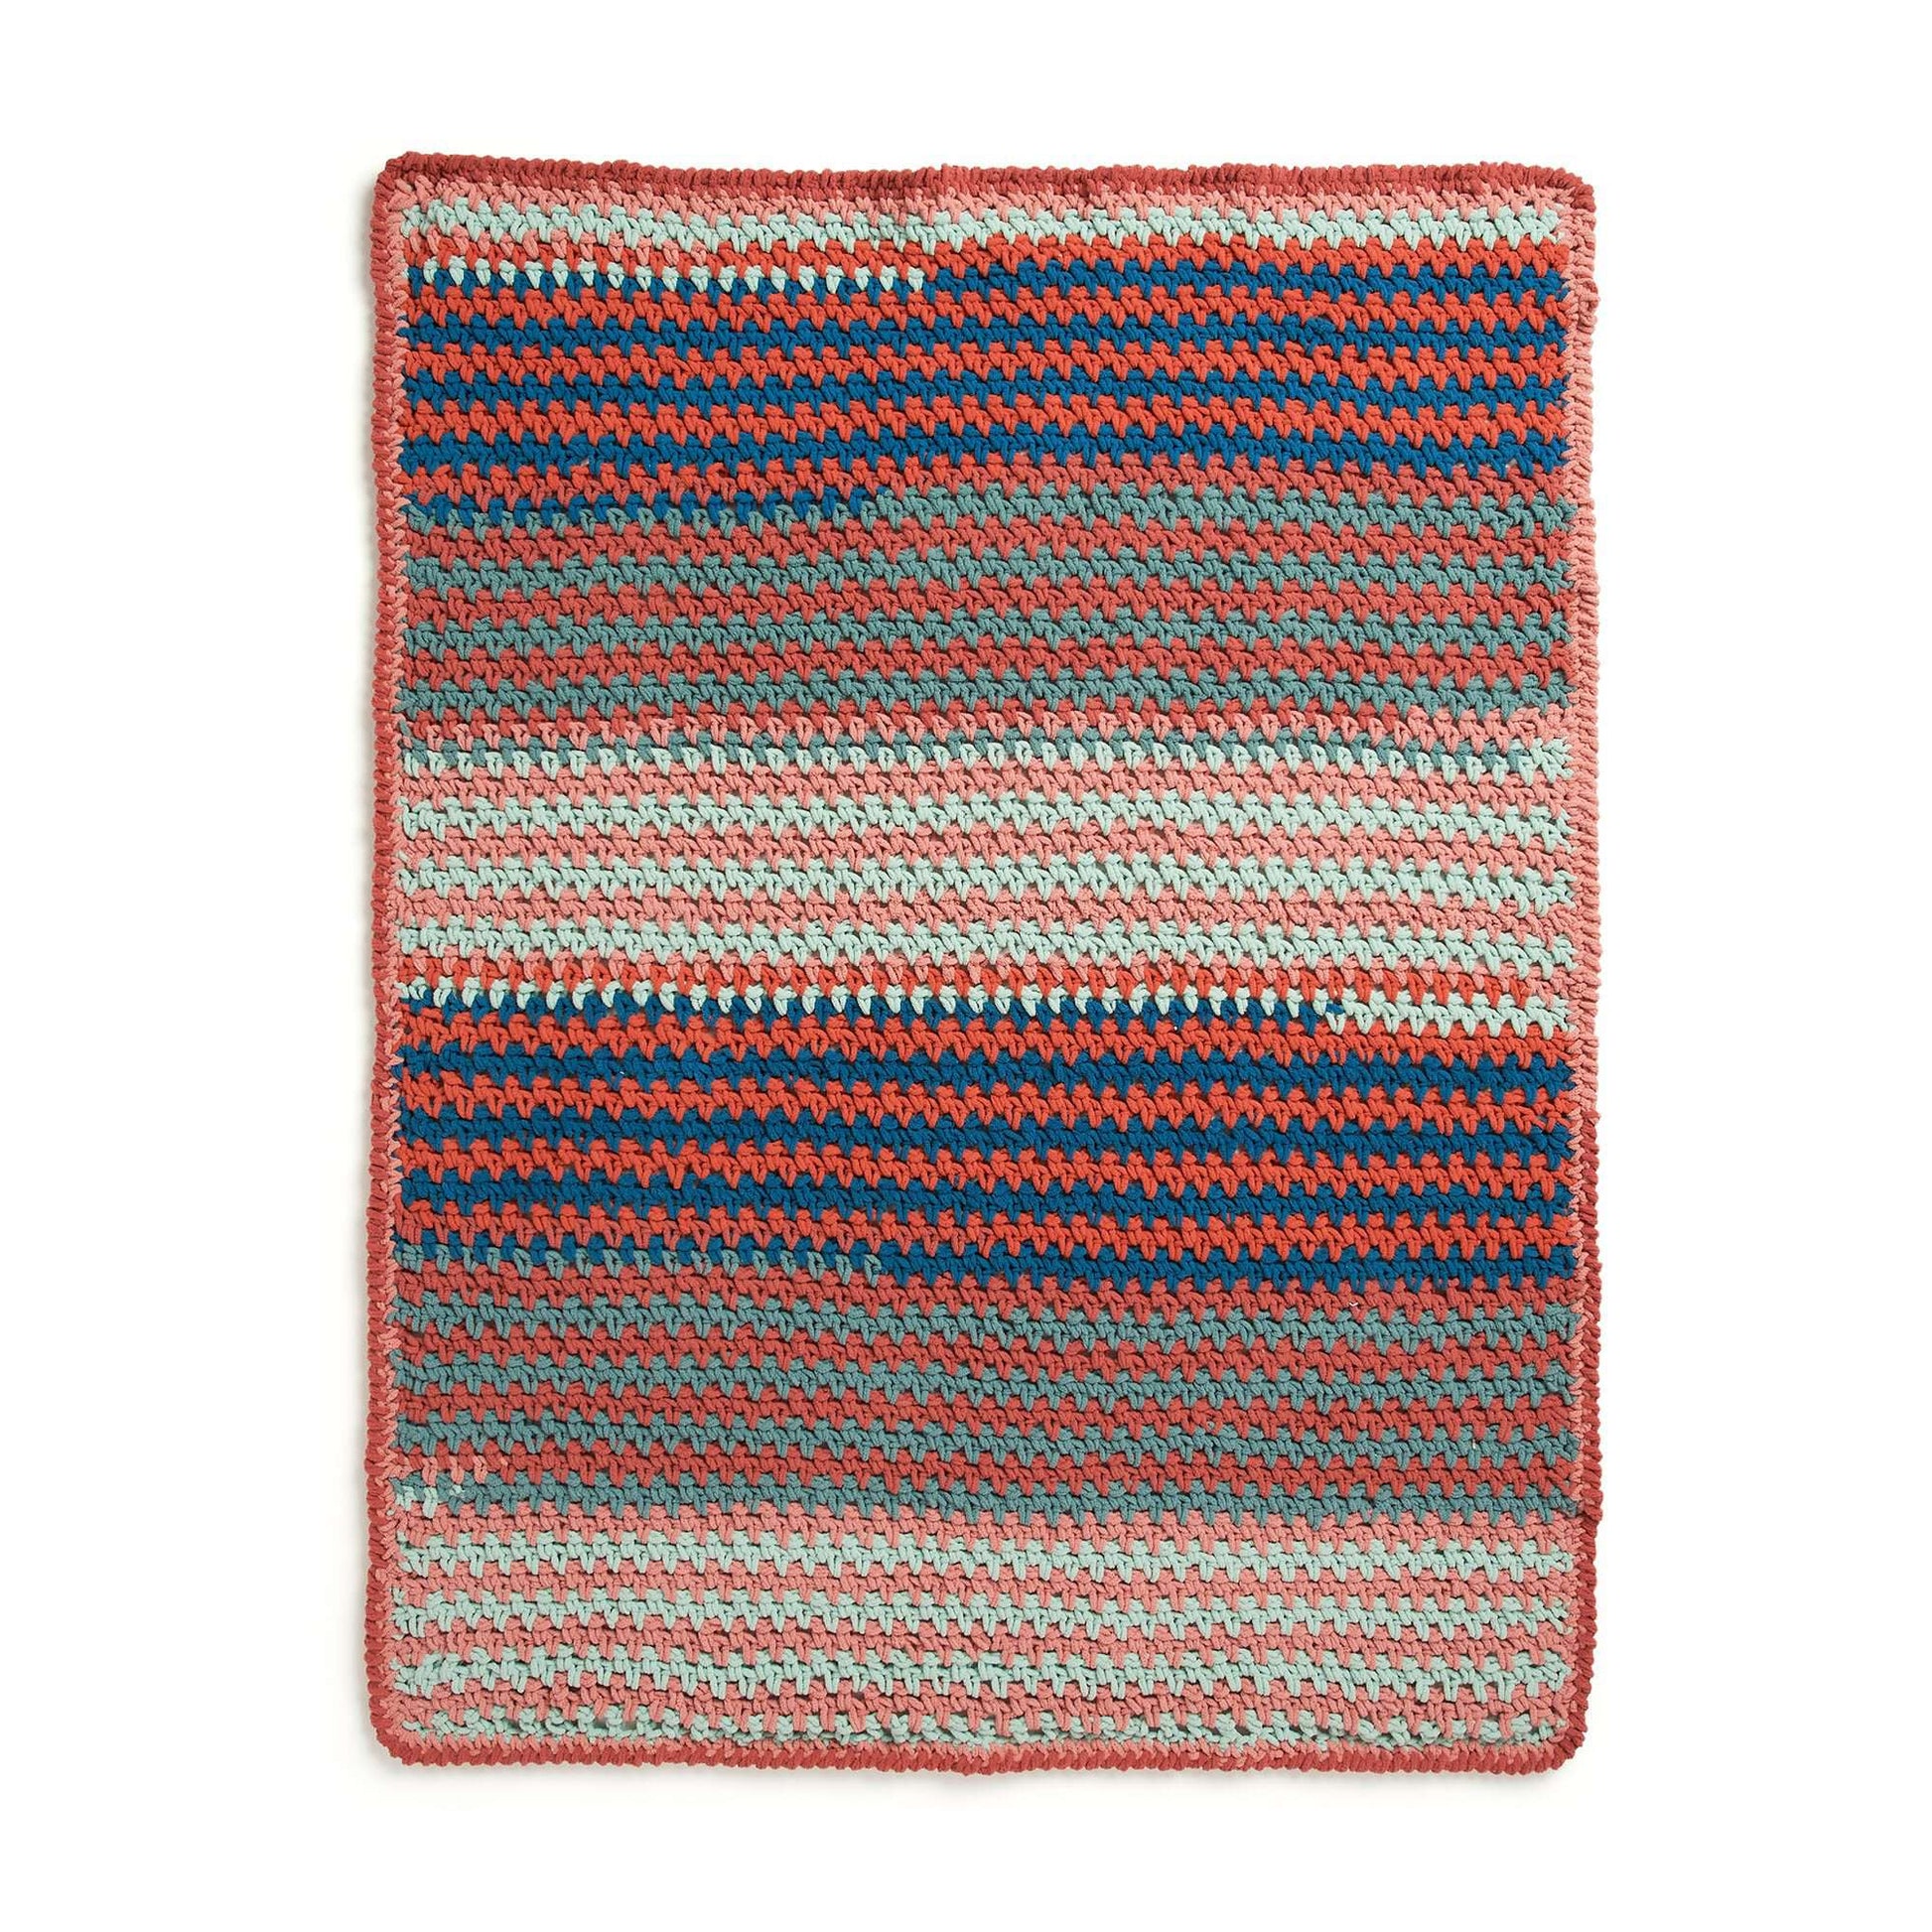 Free Bernat Touch Of Texture Crochet Blanket Pattern